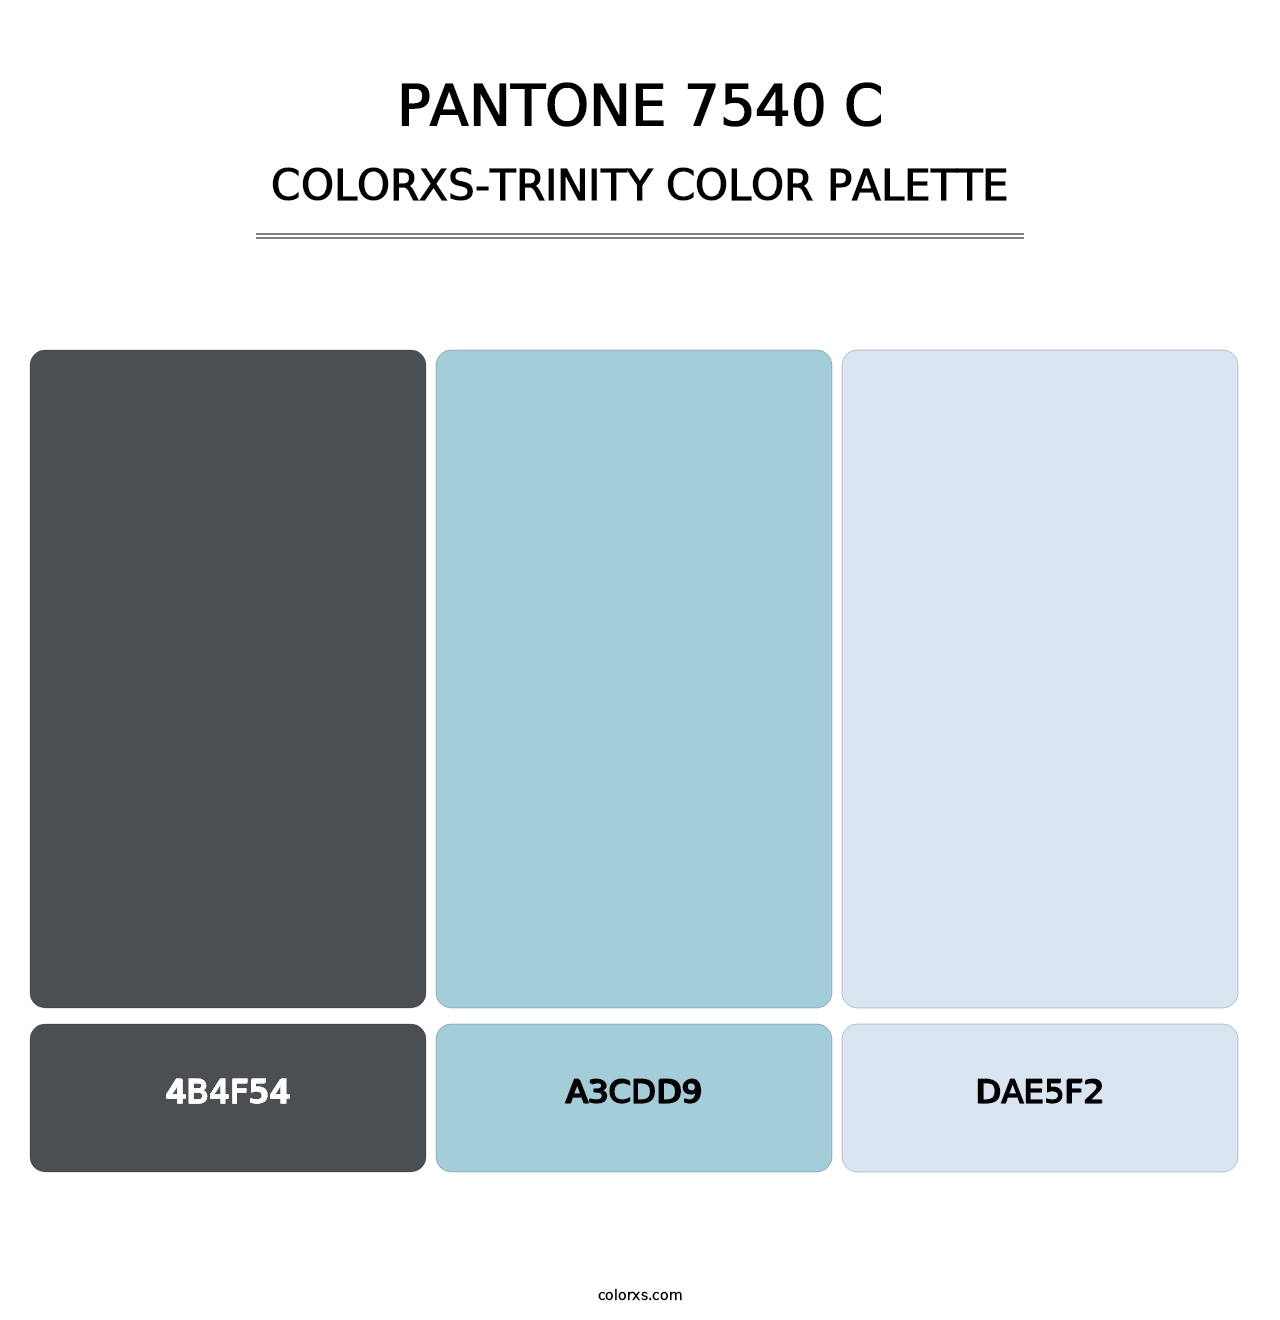 PANTONE 7540 C - Colorxs Trinity Palette